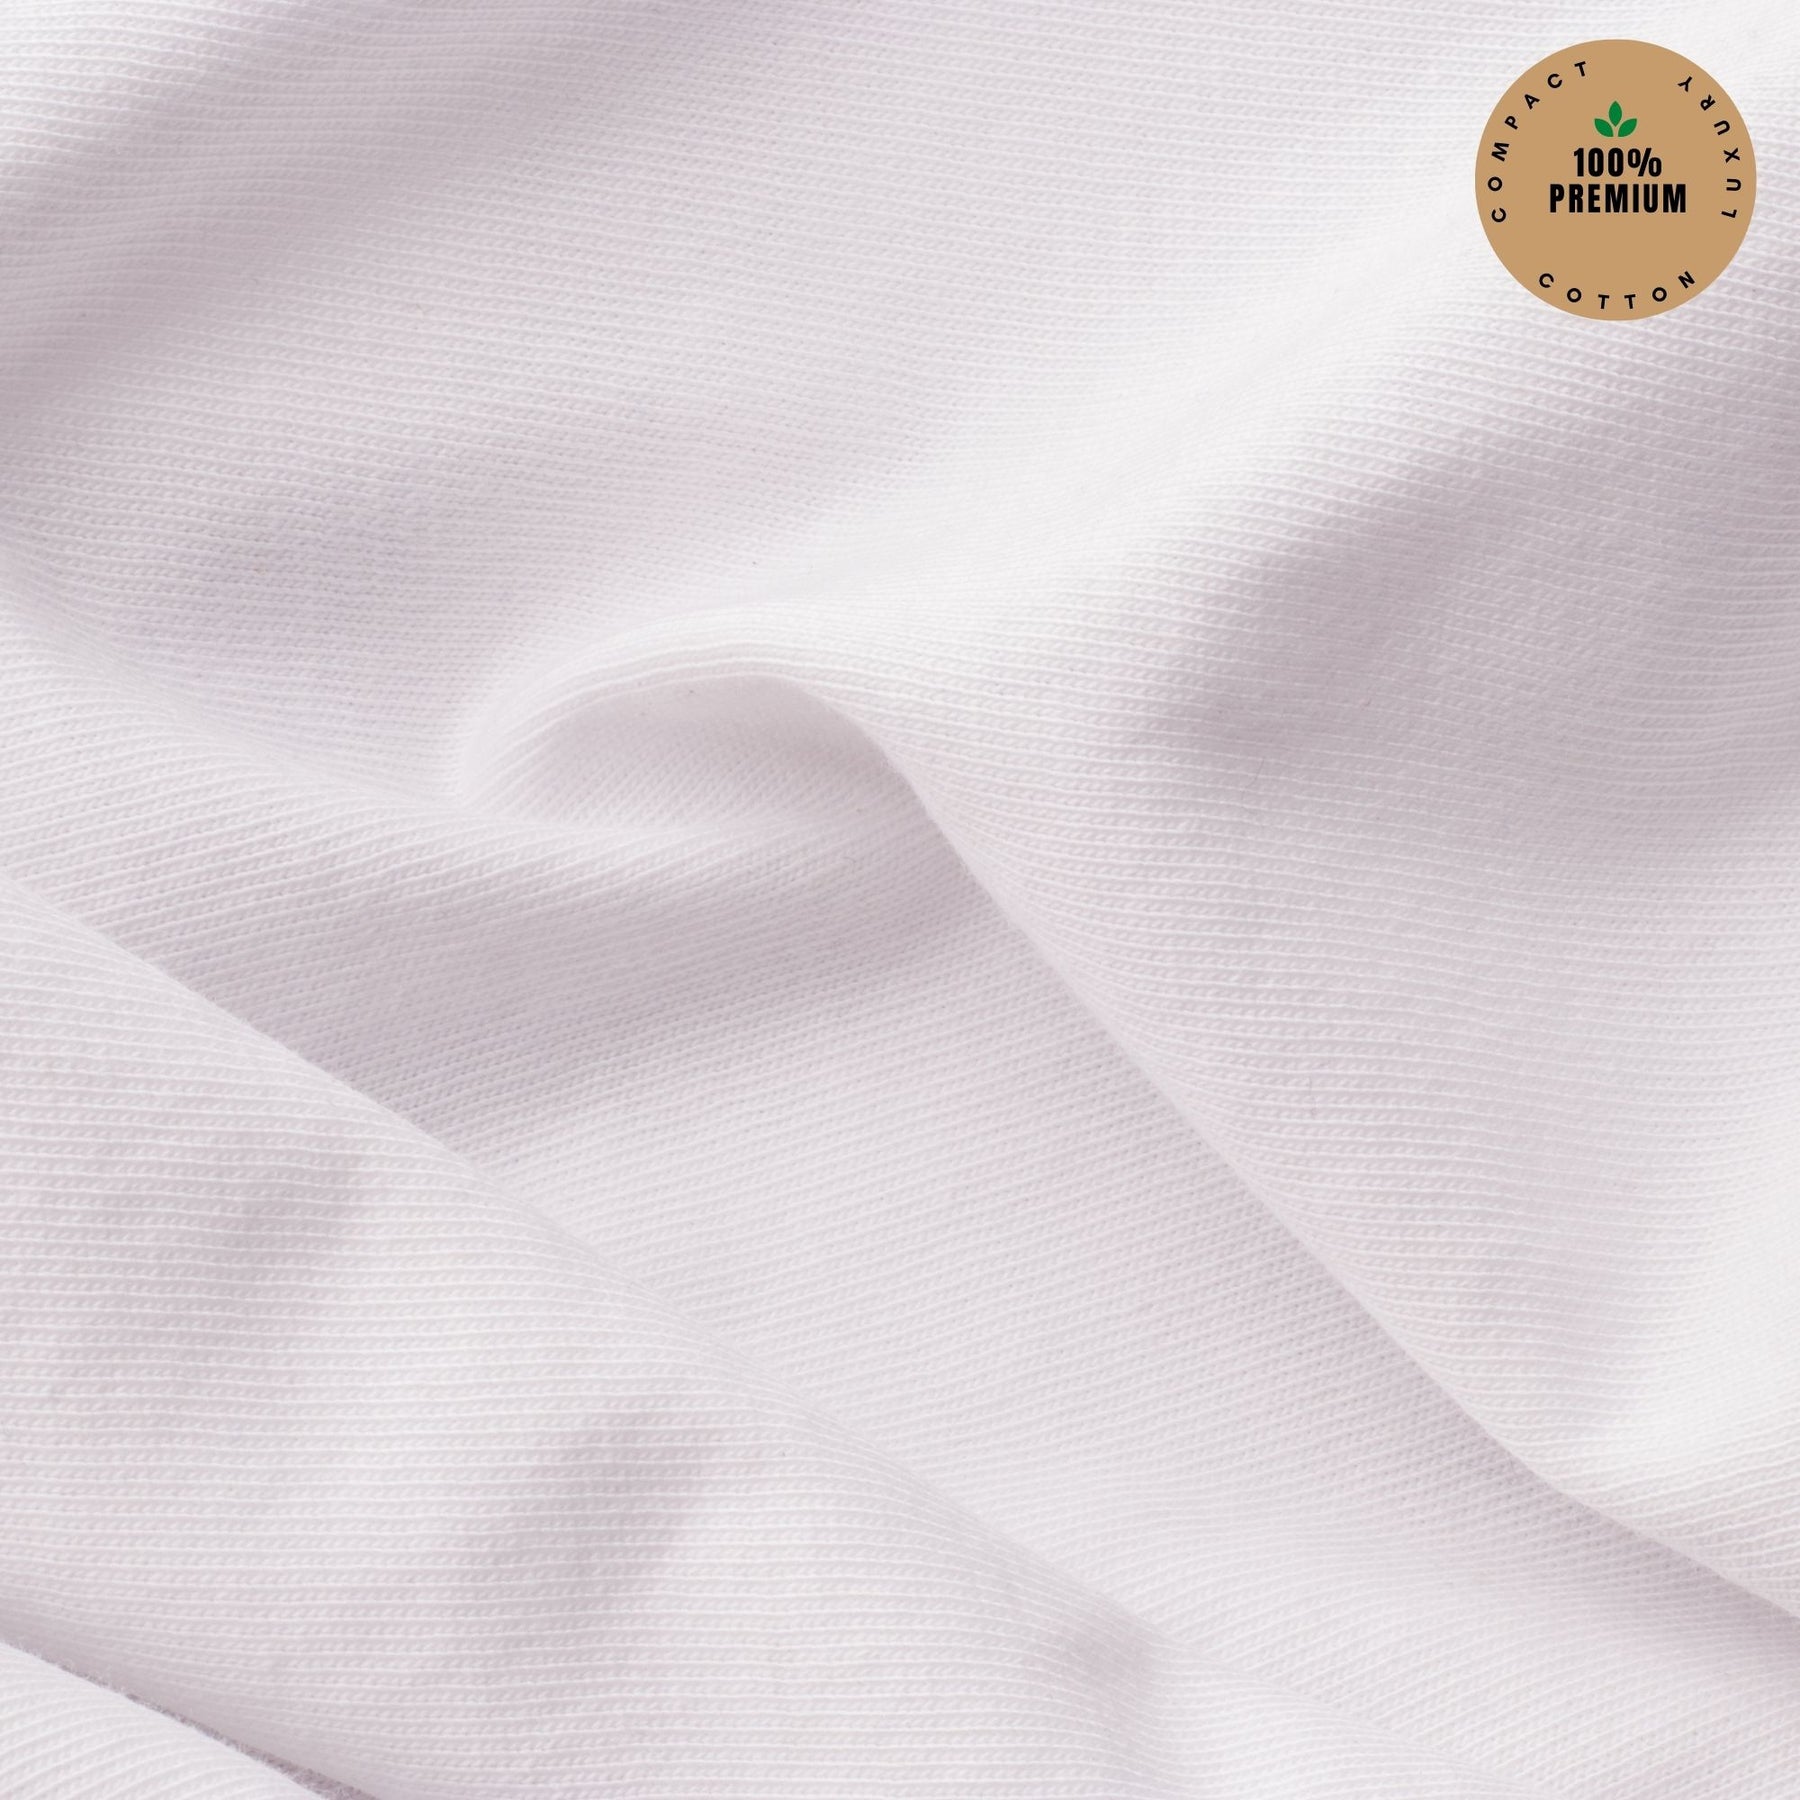 White-compact-cotton-women-tshirt